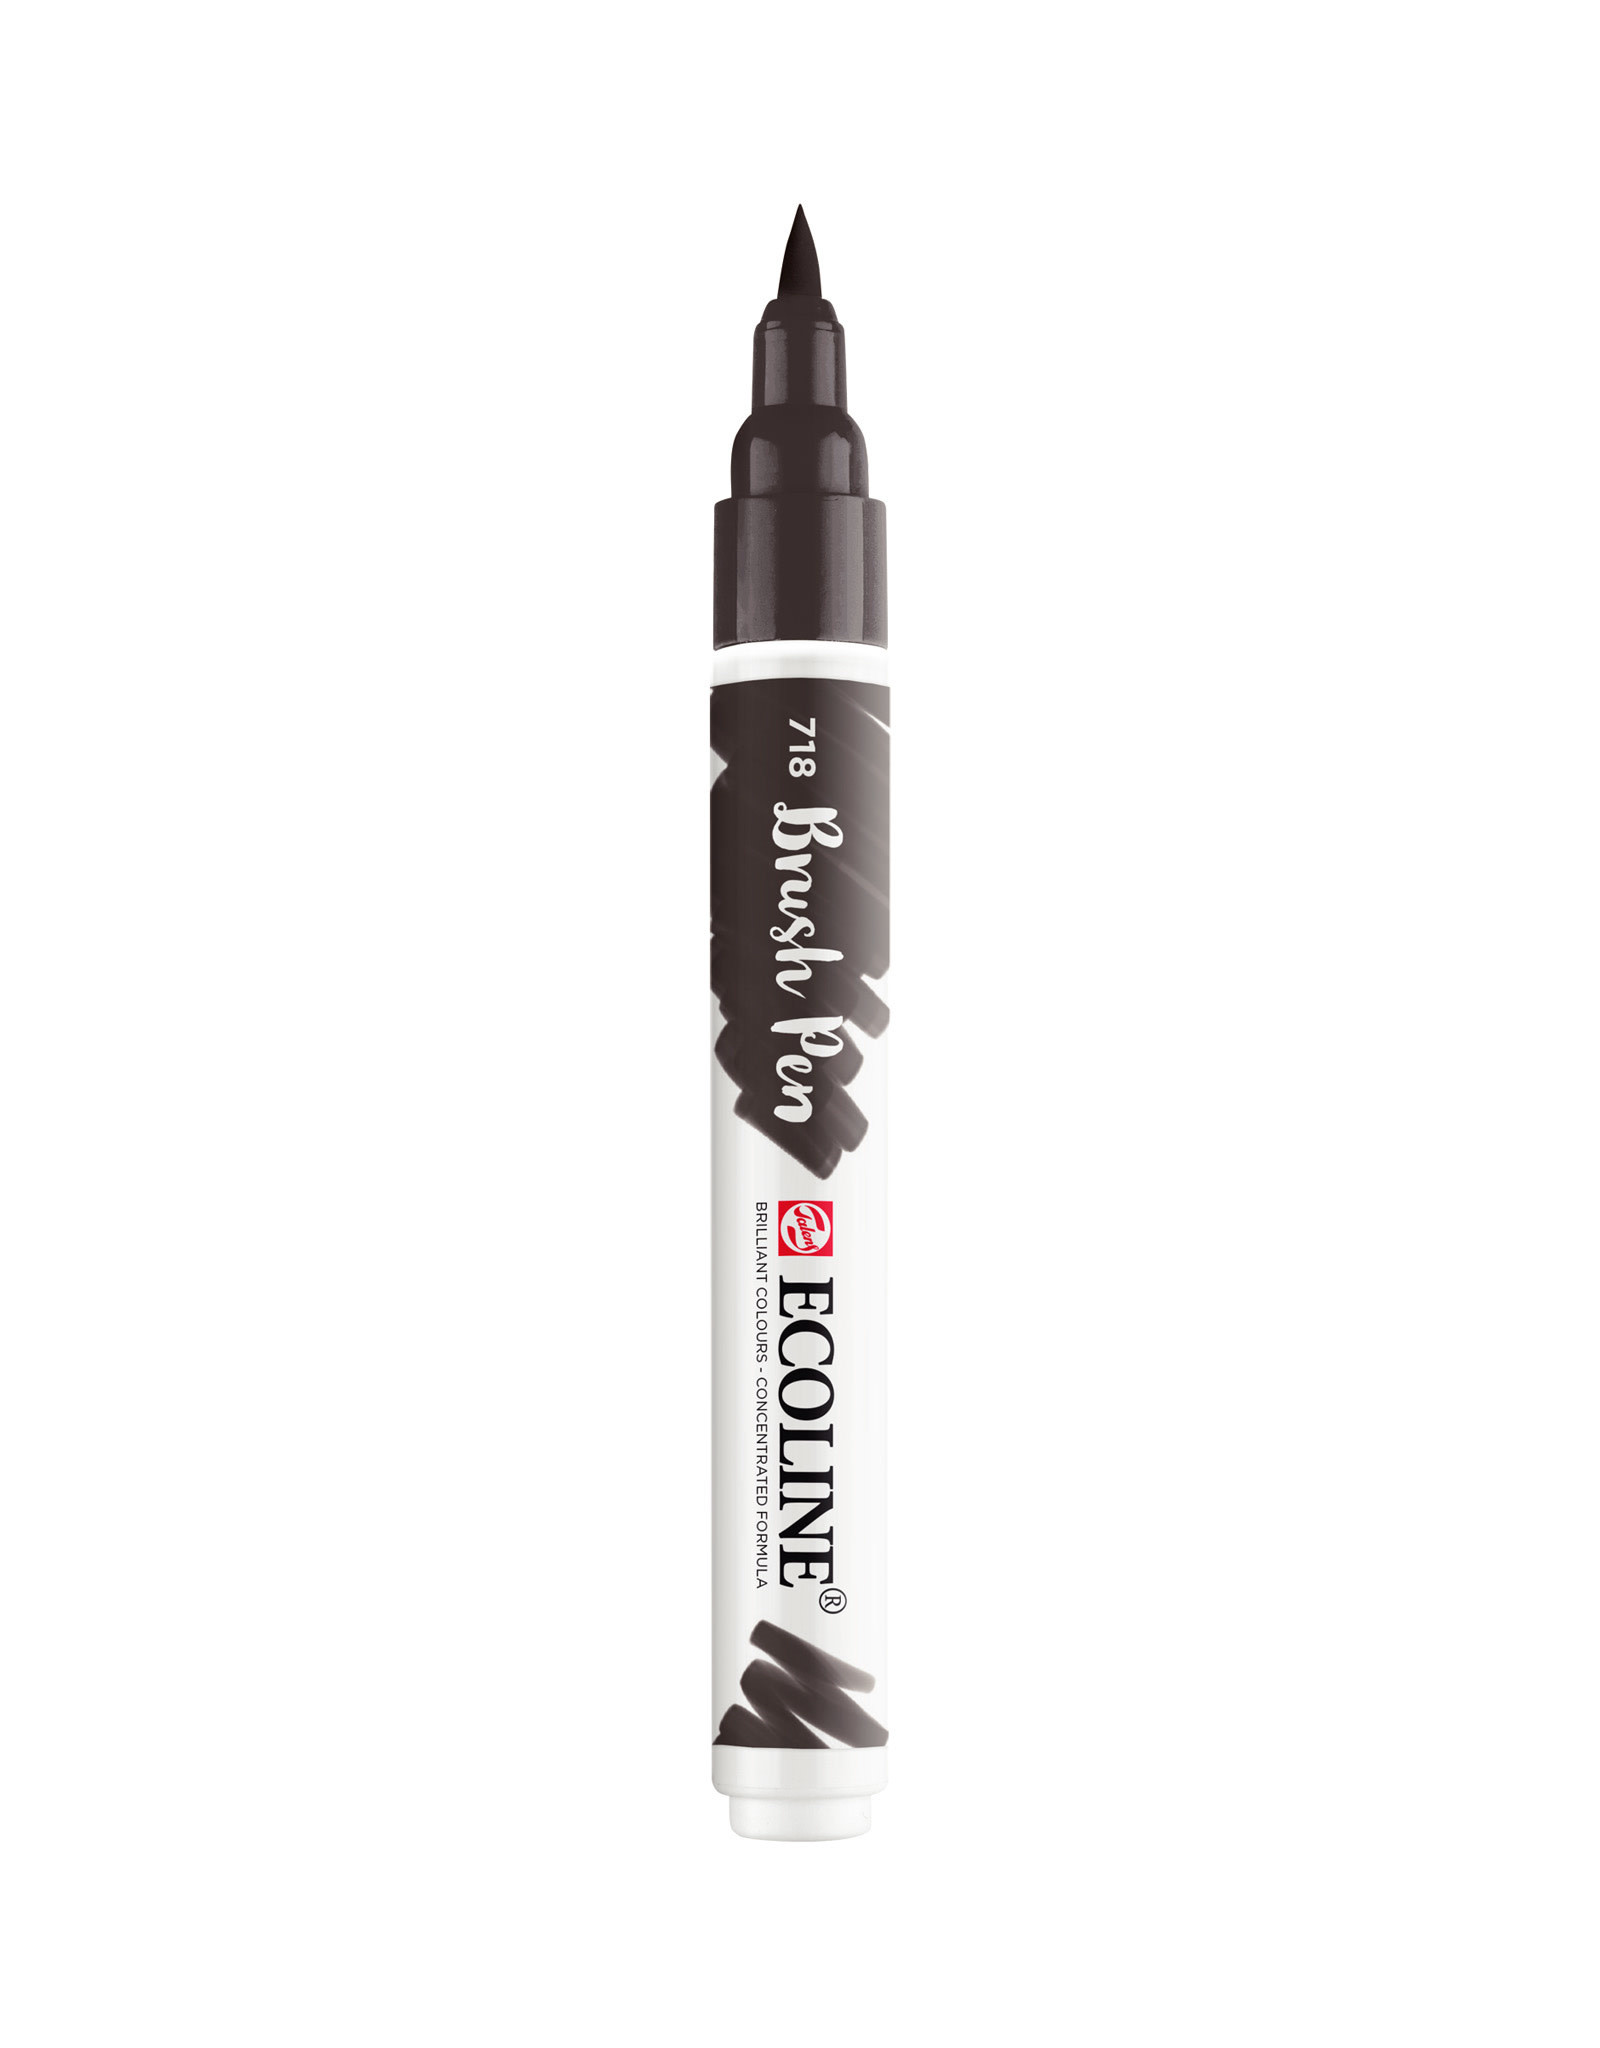 Royal Talens Ecoline Watercolour Brush Pen, Warm Grey